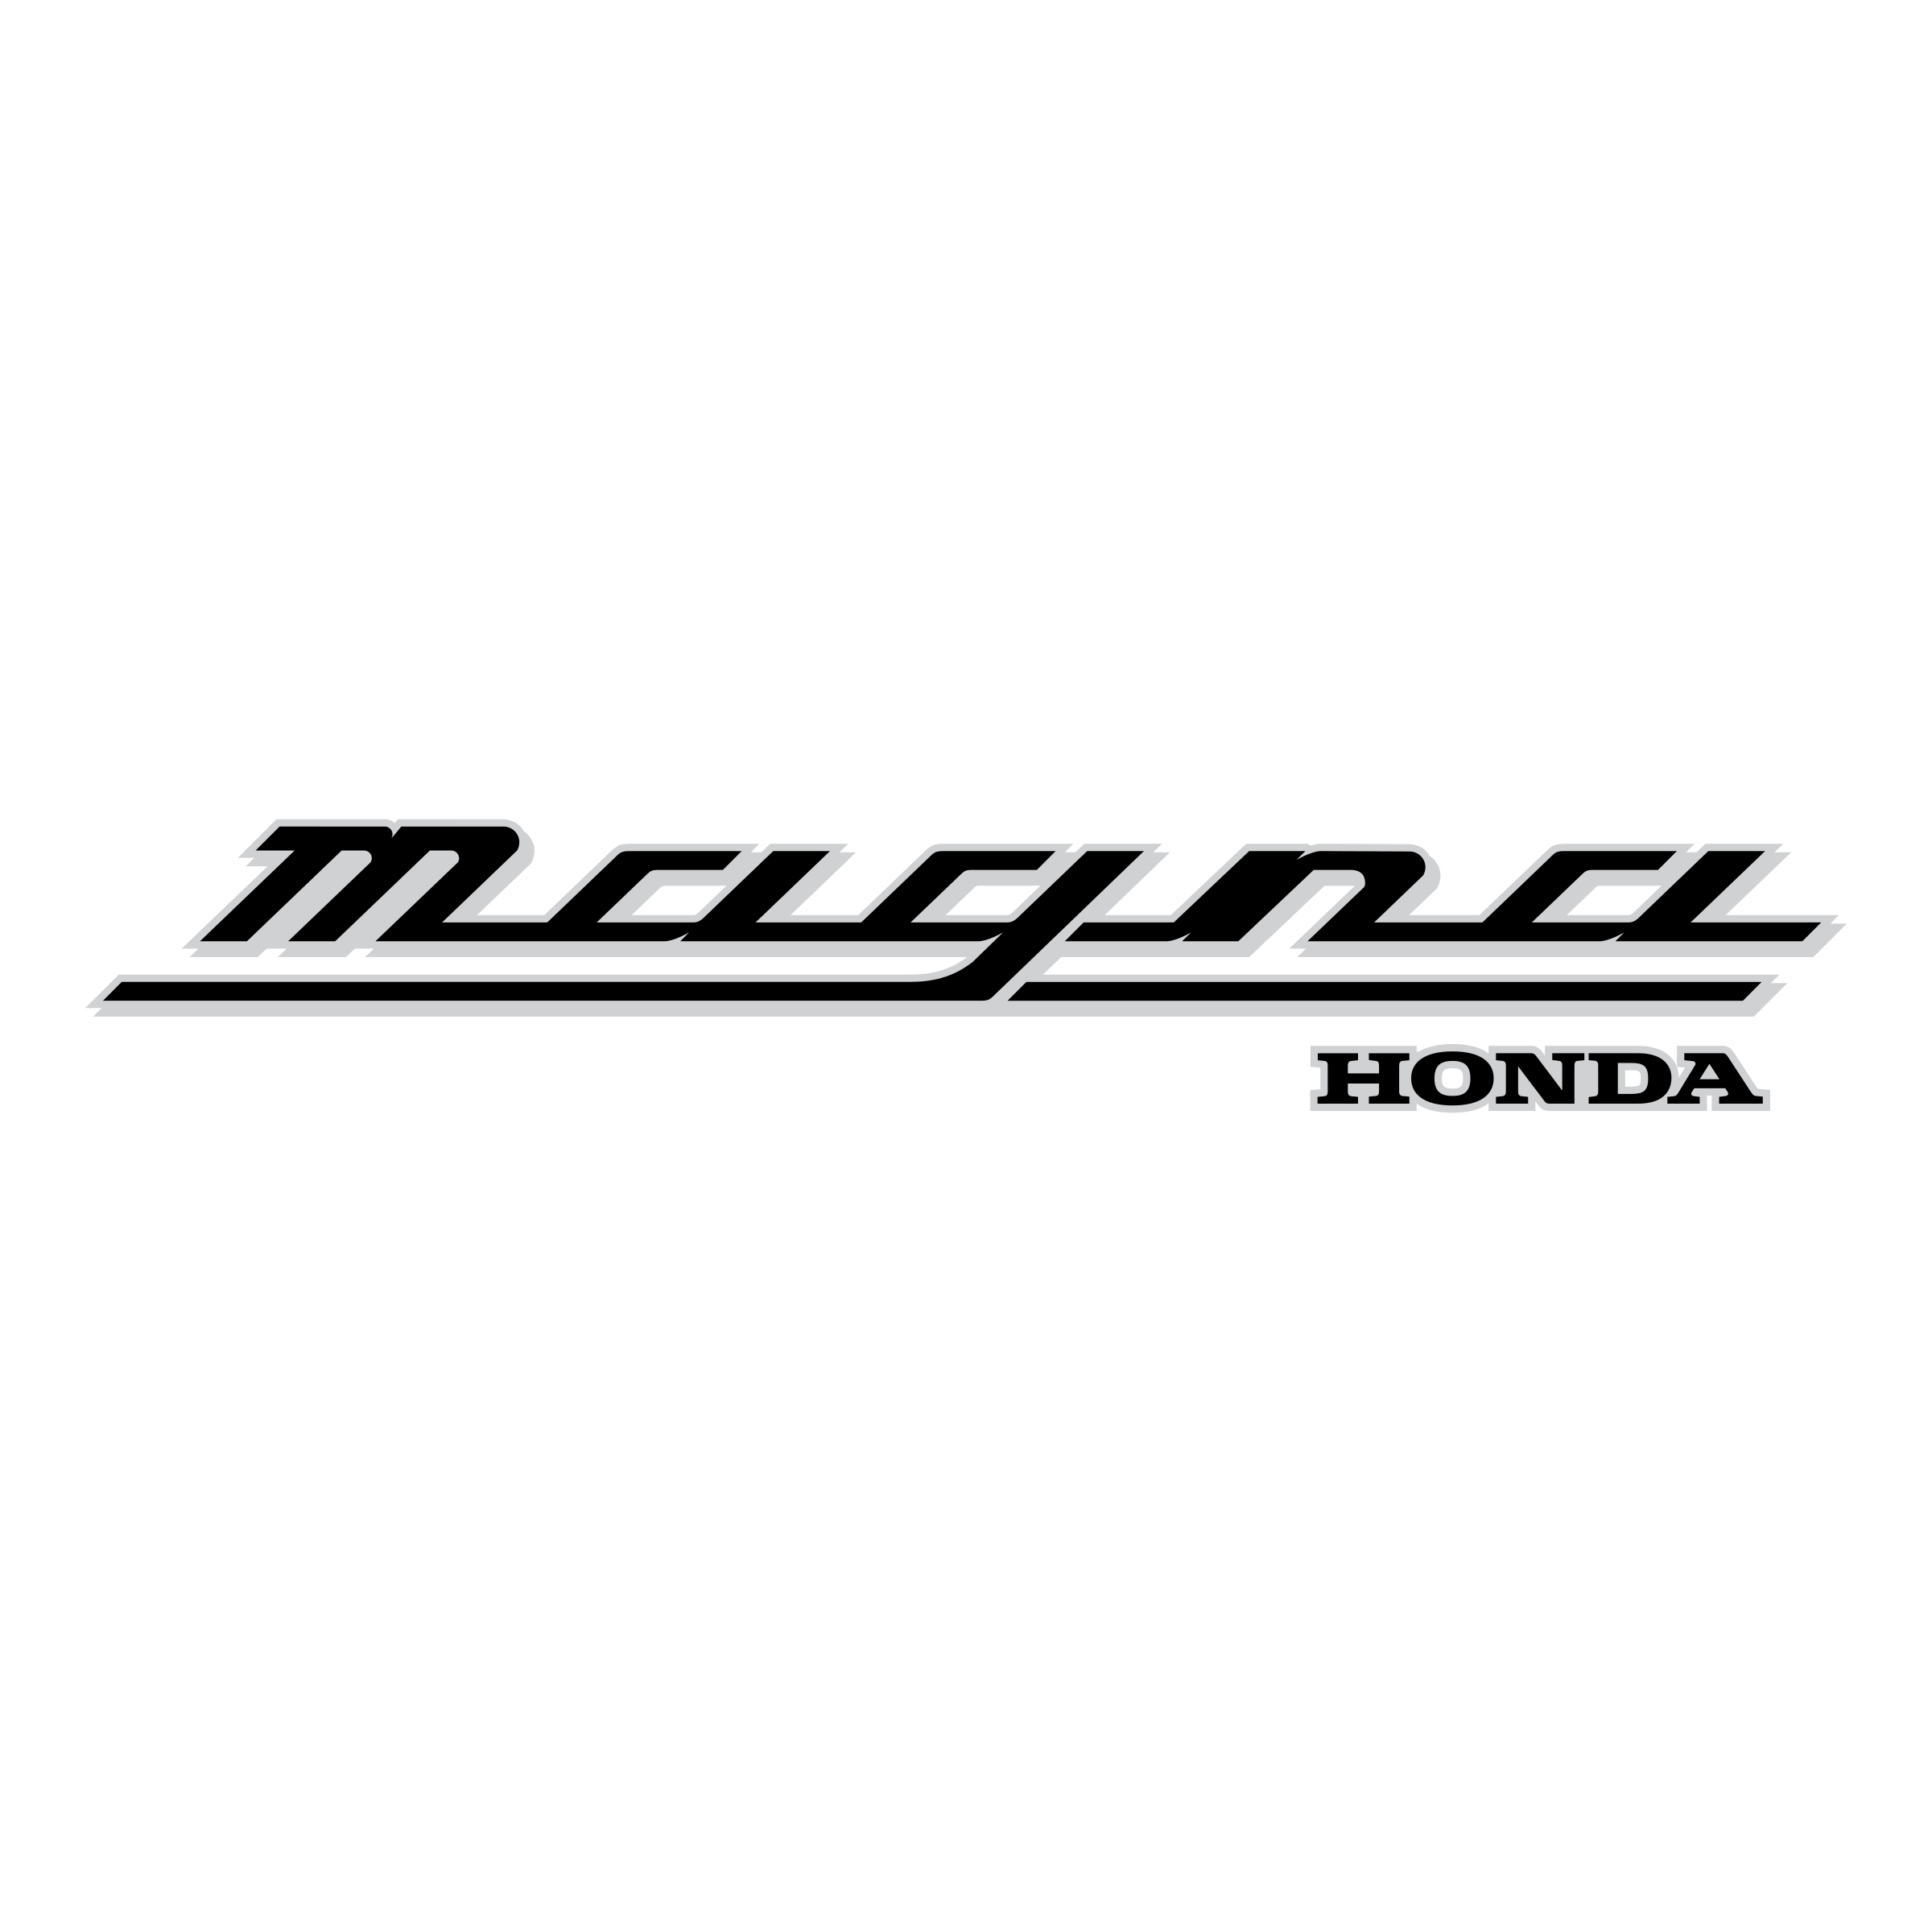 Magna Logo - Magna Logo PNG Transparent & SVG Vector - Freebie Supply